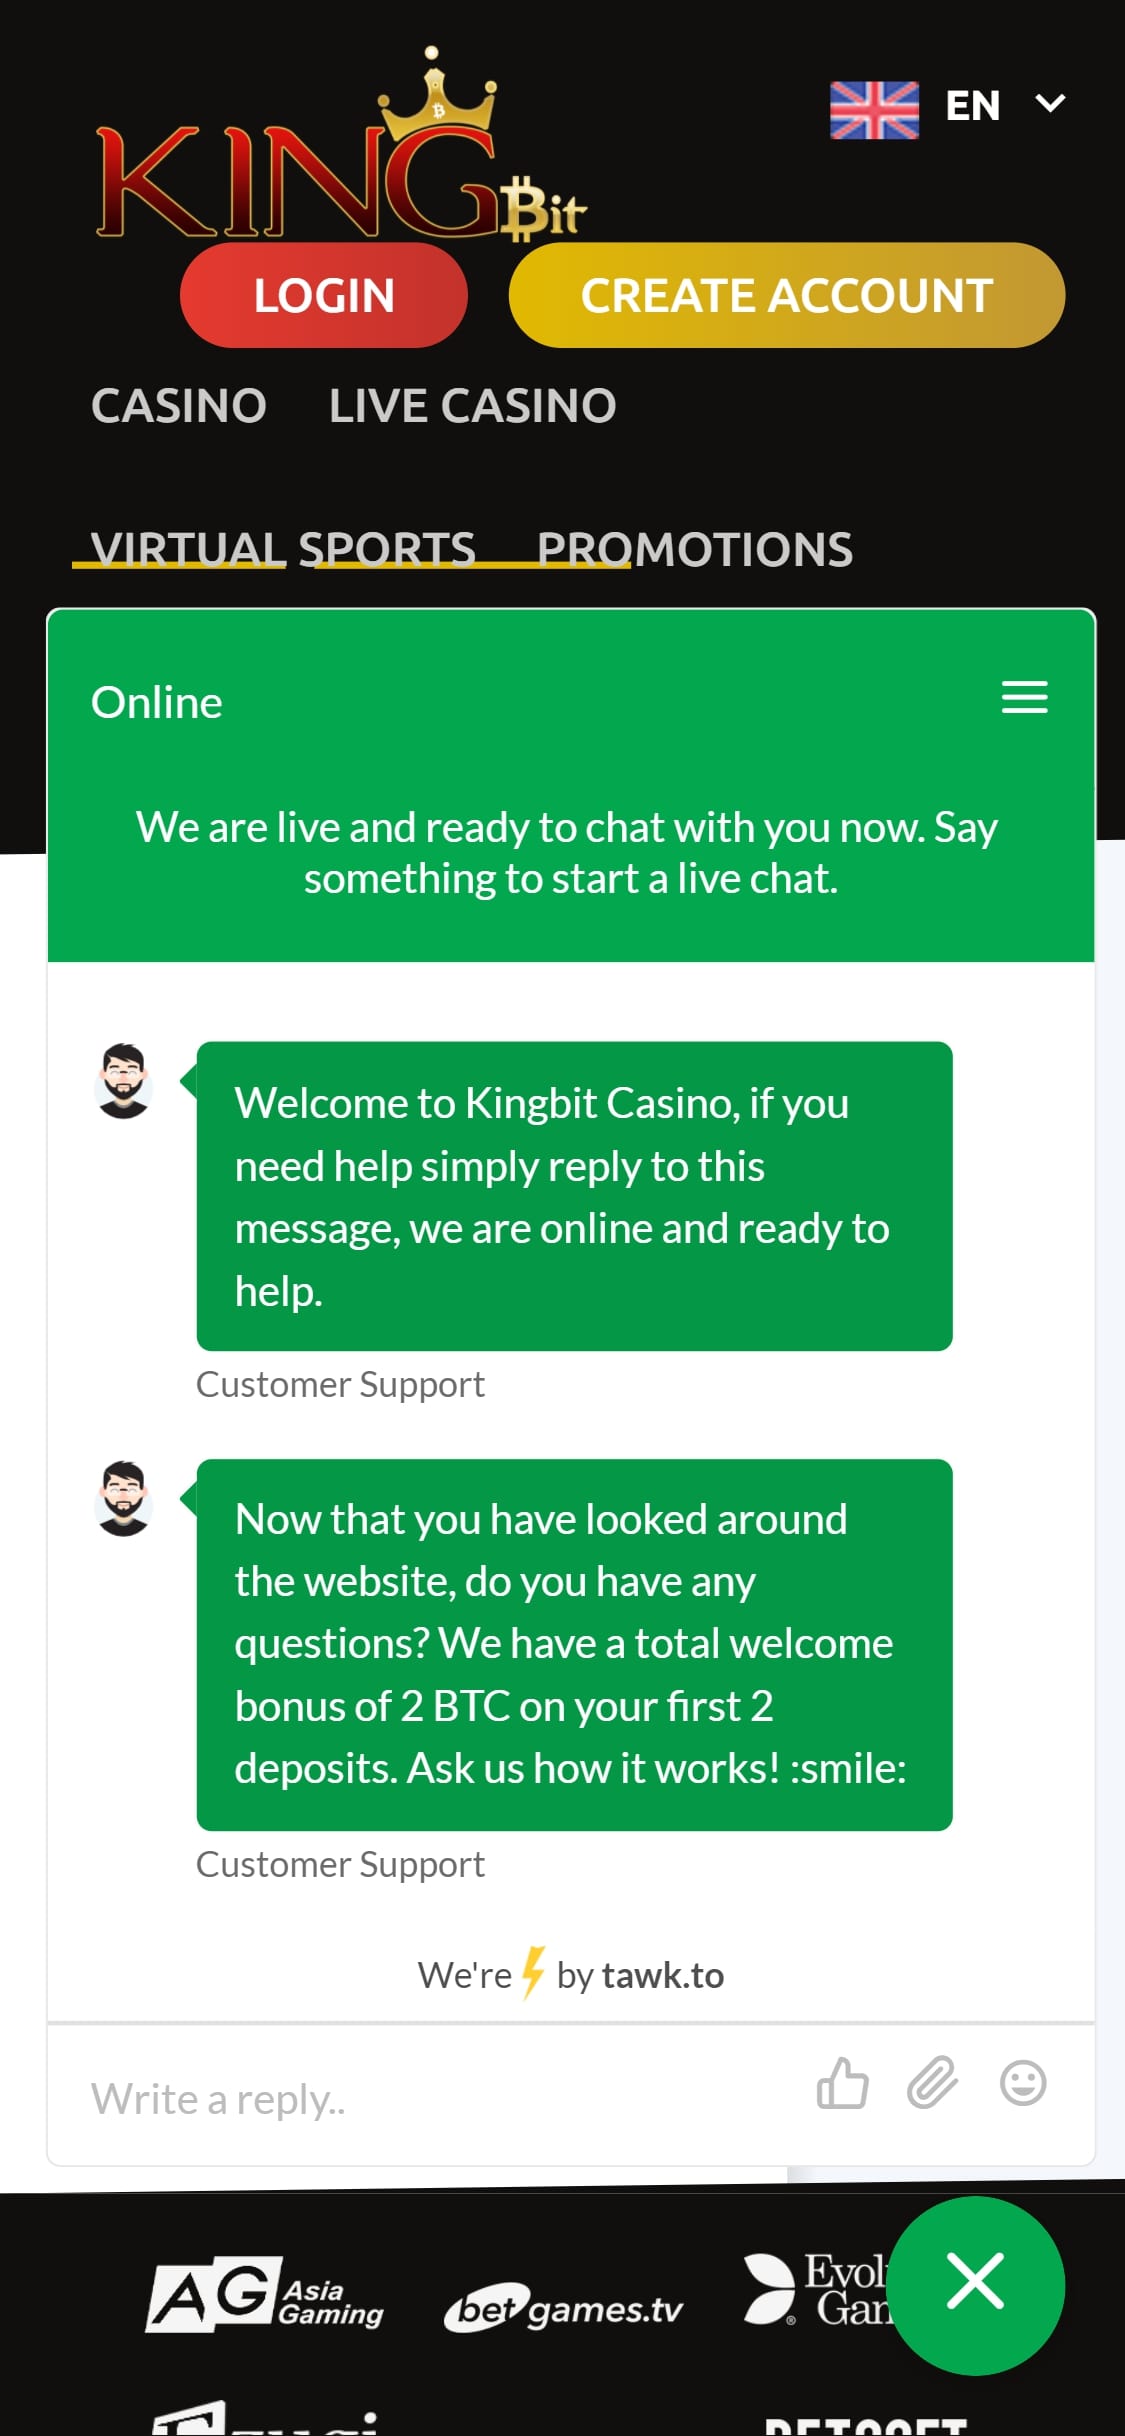 KingBit Casino Mobile Support Review